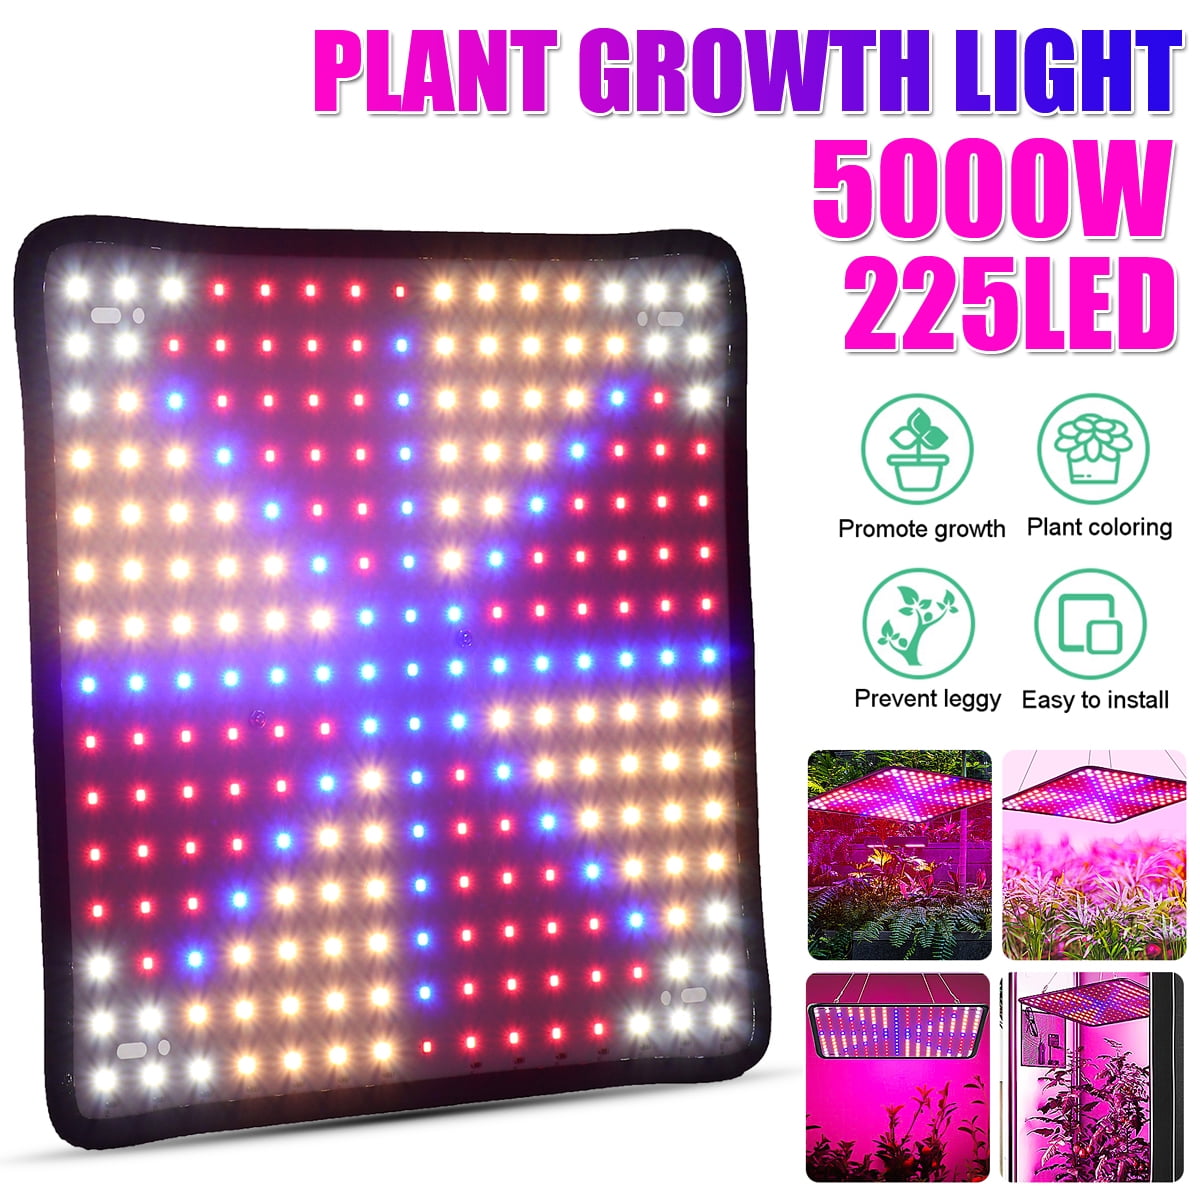 5000W LED Grow Light Hydroponic Full Spectrum Indoor Veg Flower Plant Lamp USA 